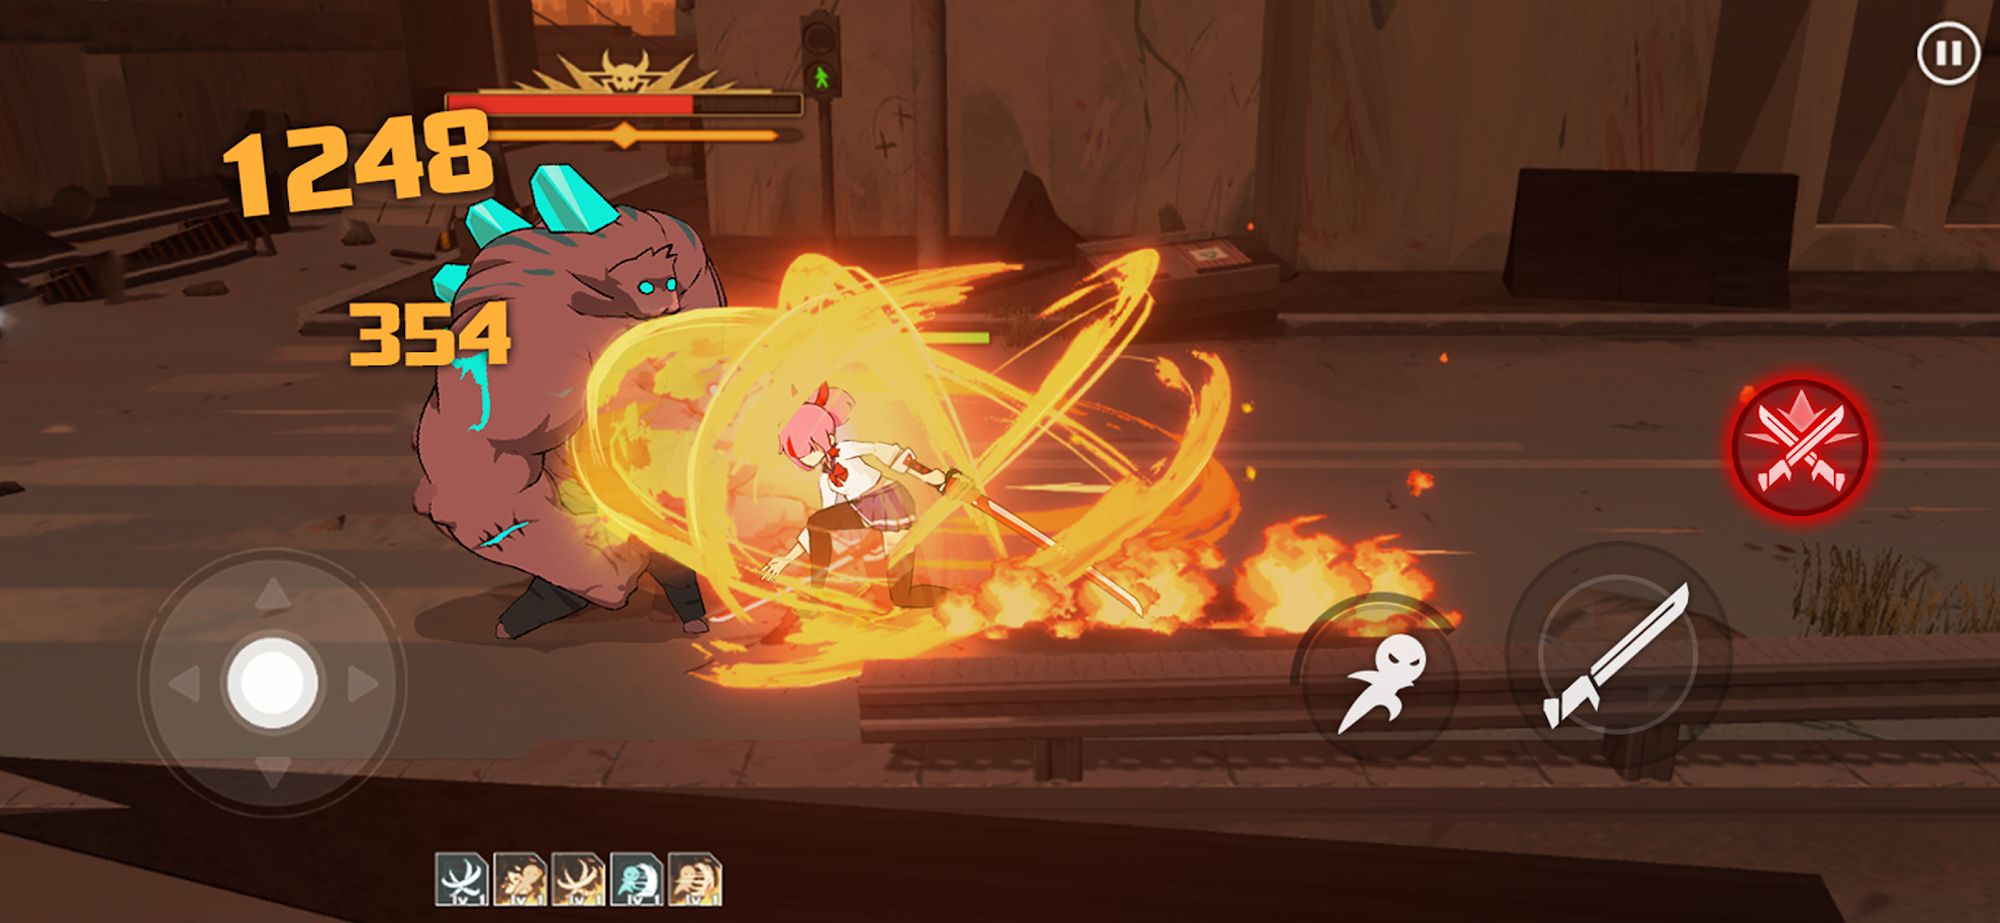 Swordash - Android game screenshots.